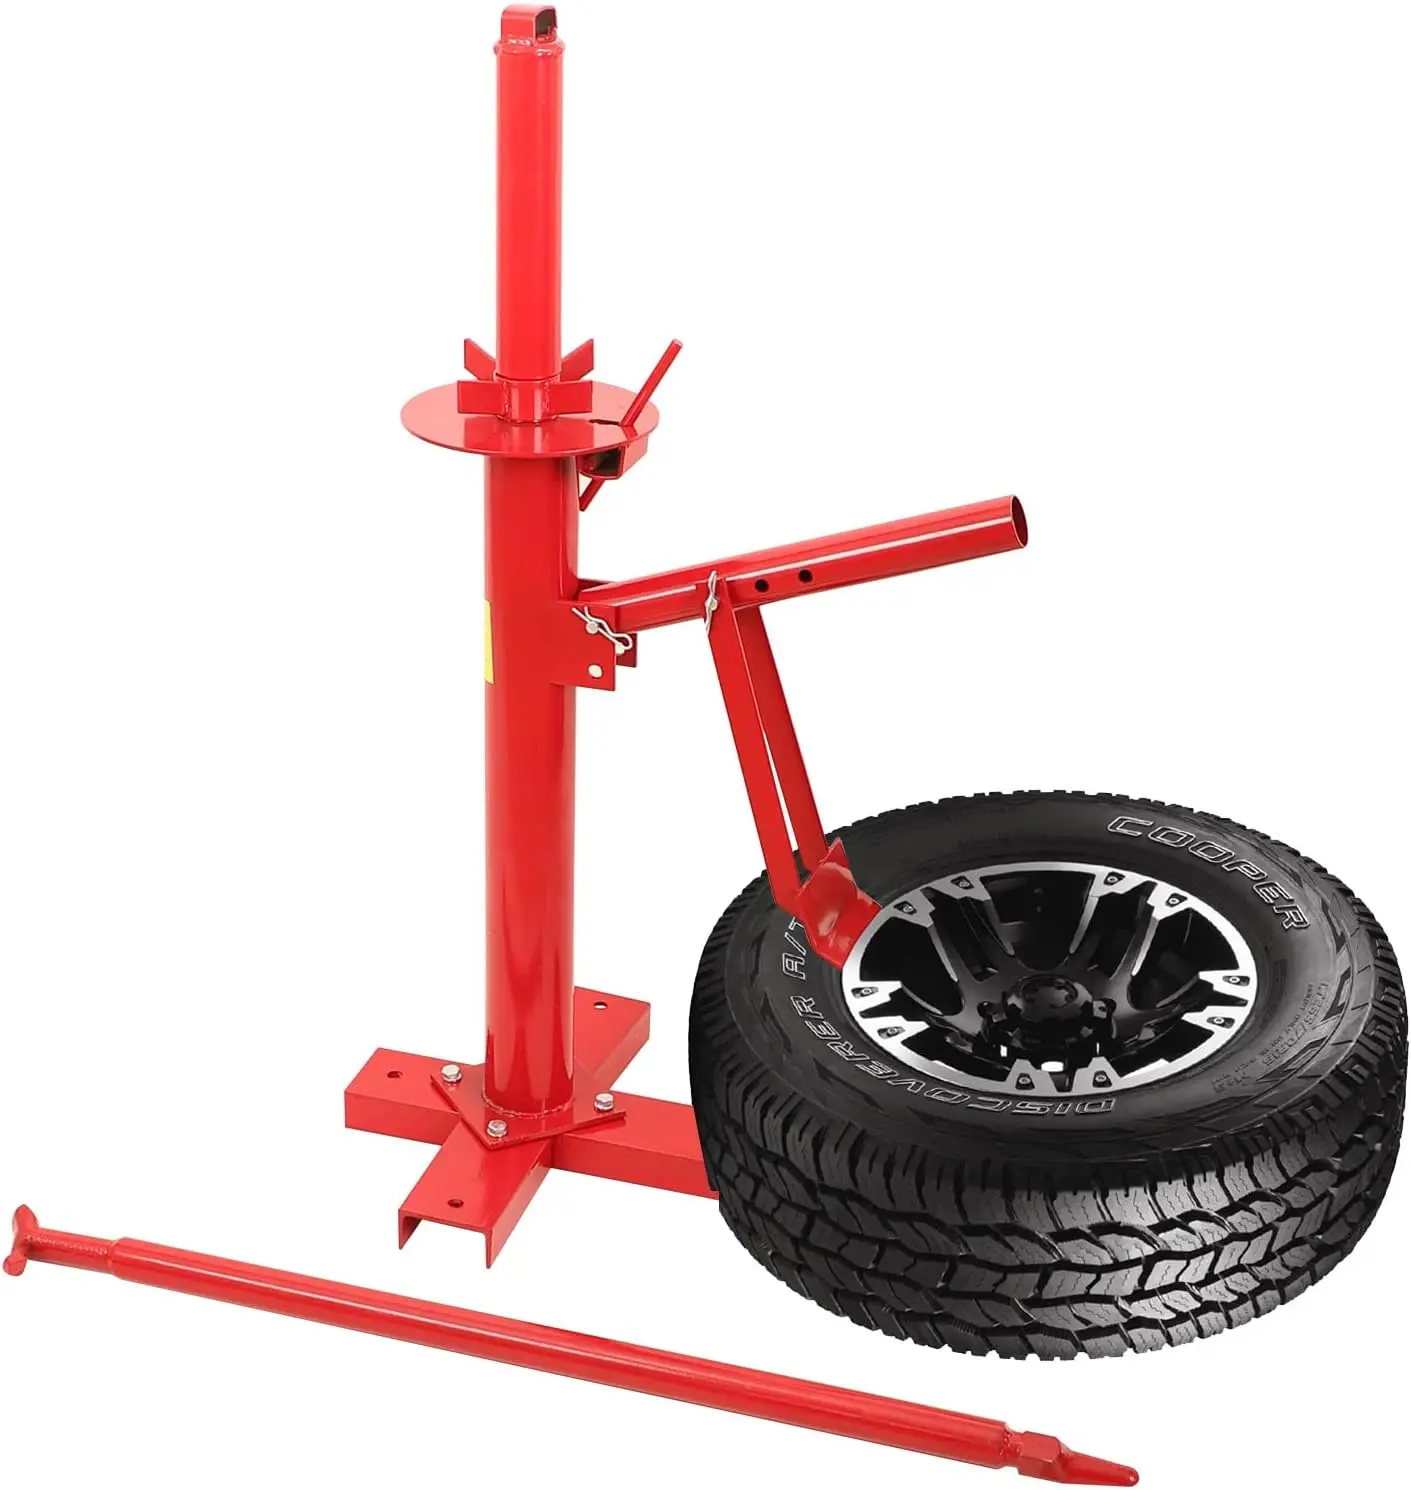 

Шиномонтажный инструмент, портативный инструмент для установки шин от 8 до 16 дюймов, для автомобиля, грузовика, дома, гаража, малого автомагазина